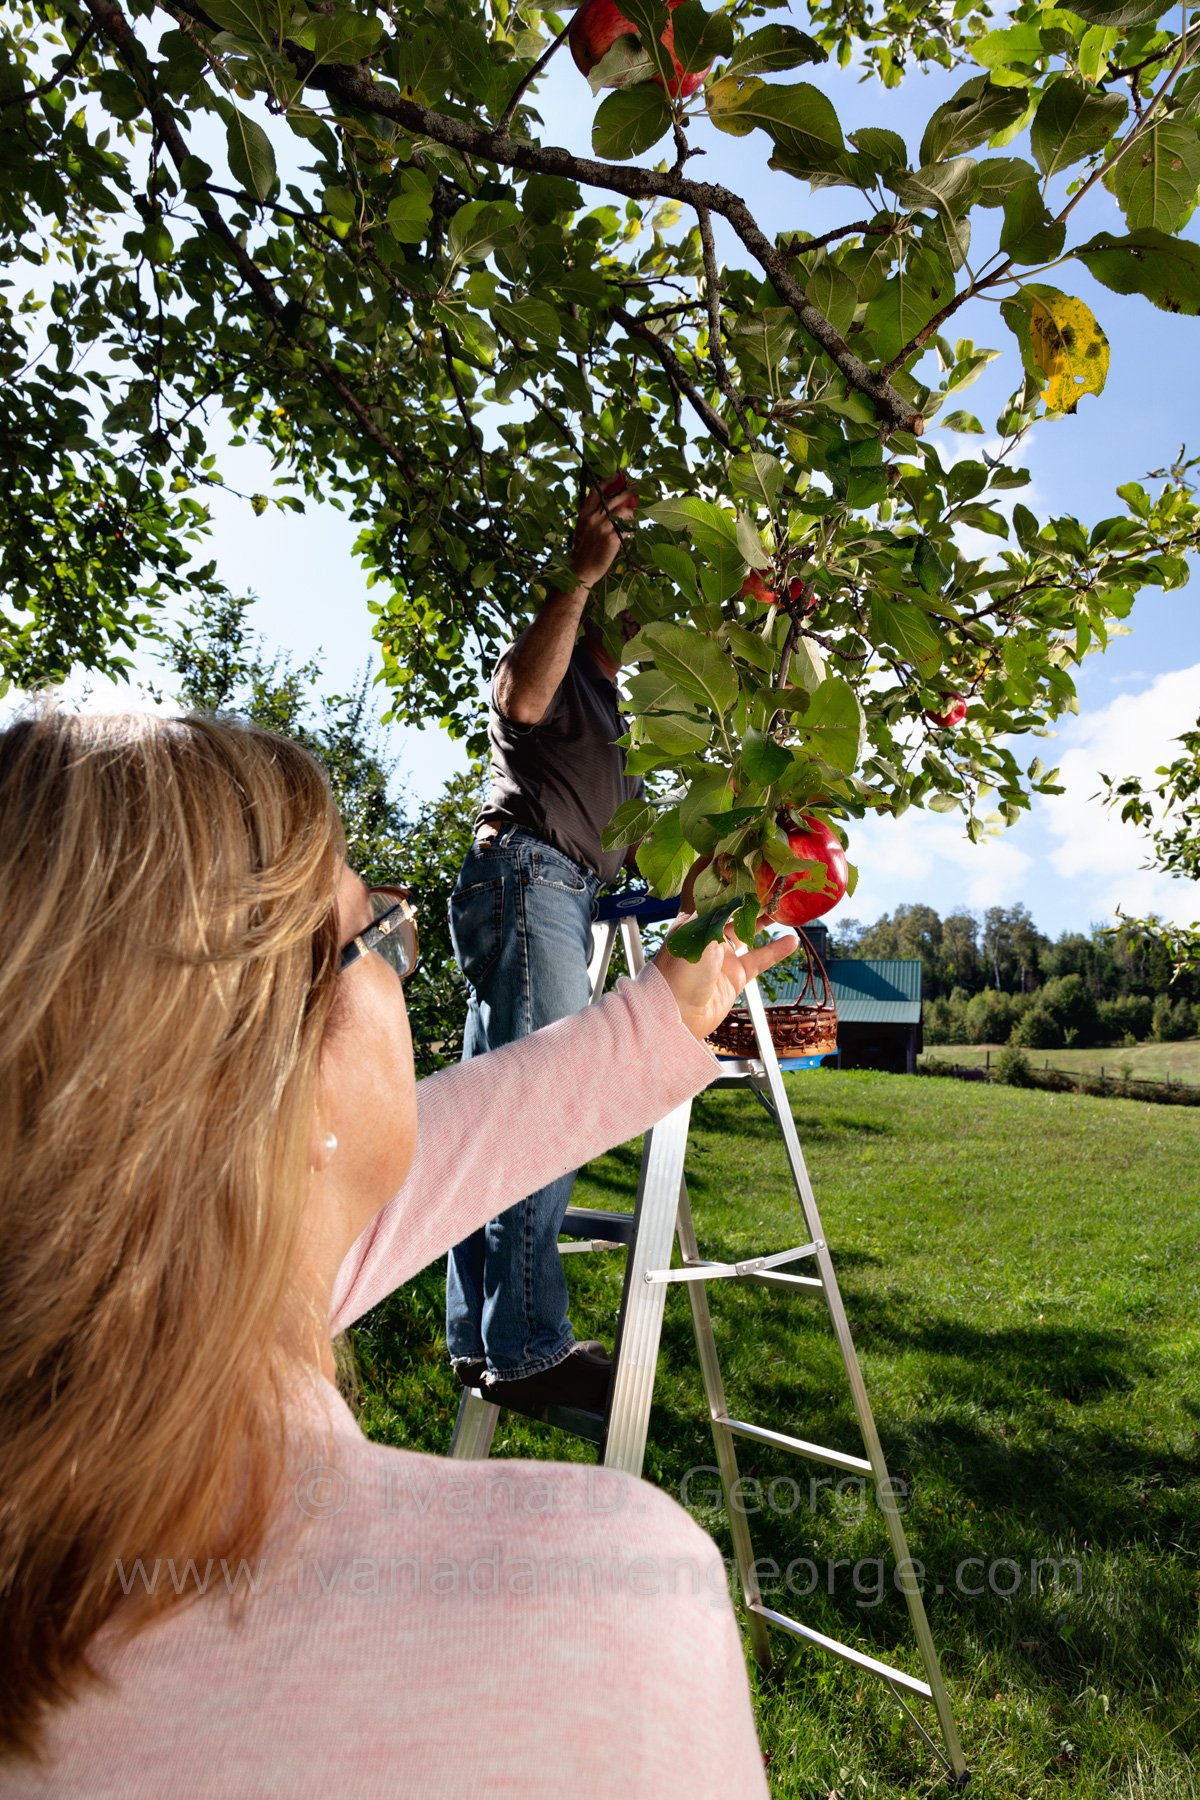 Linda and Joseph Harvest Apples in August at Five Belles Farm